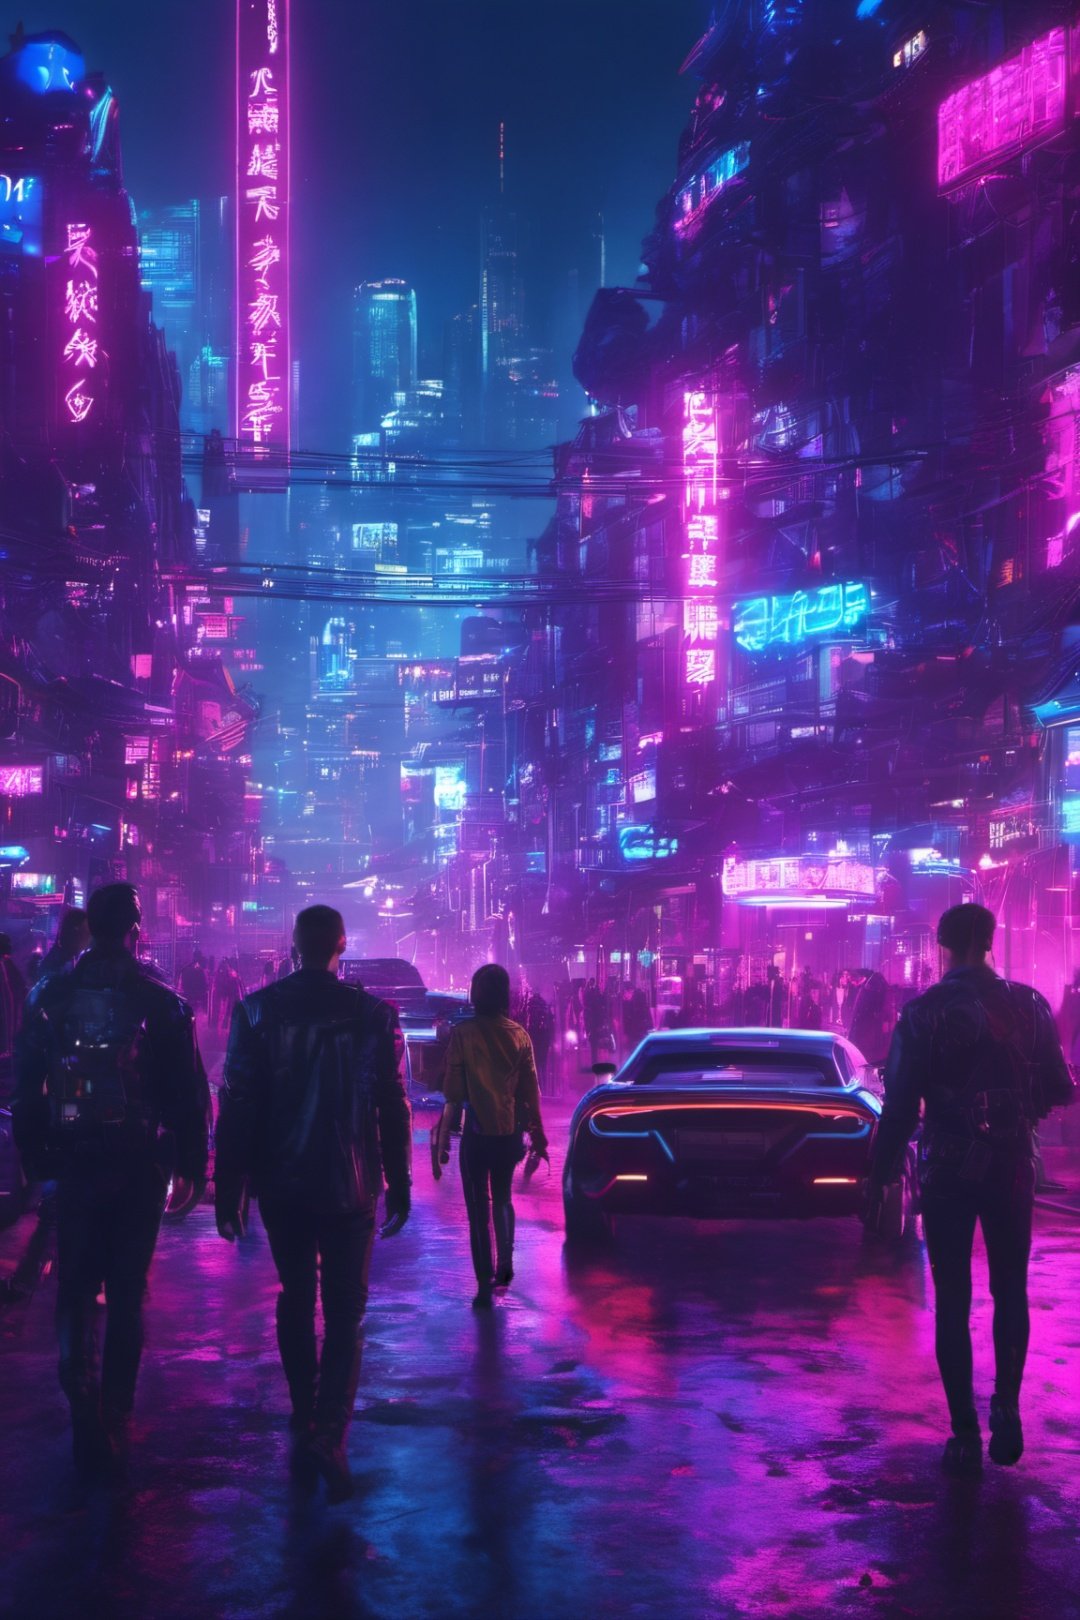 night city, cyperpunk style, people walking on street, neon lighting, buildings, traffic, cyber cars